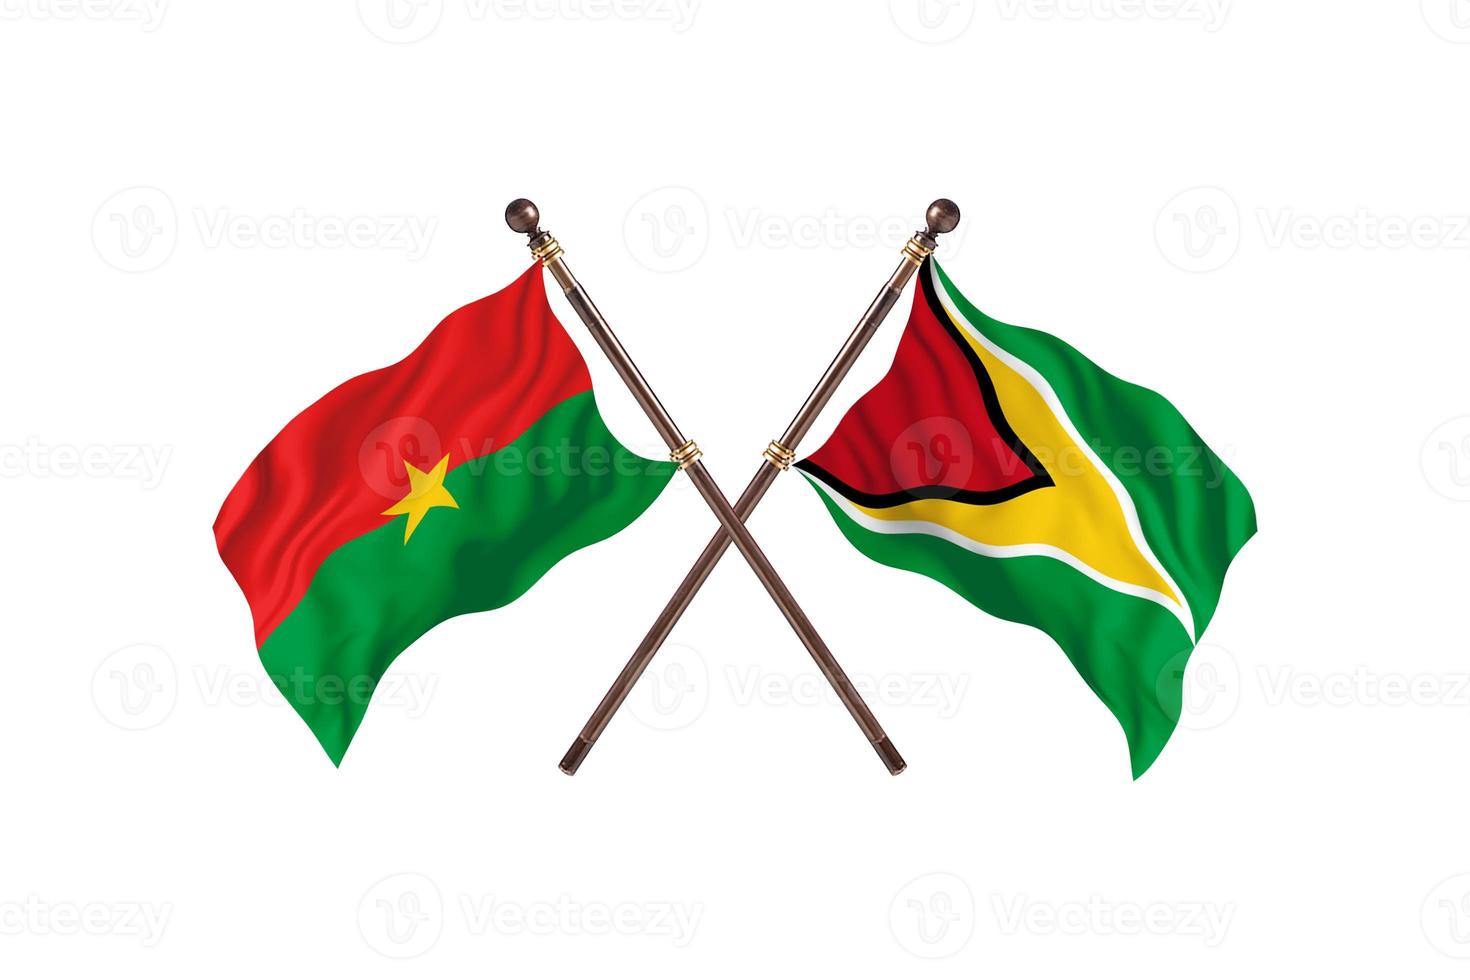 Burkina Faso versus Guyana Two Country Flags photo